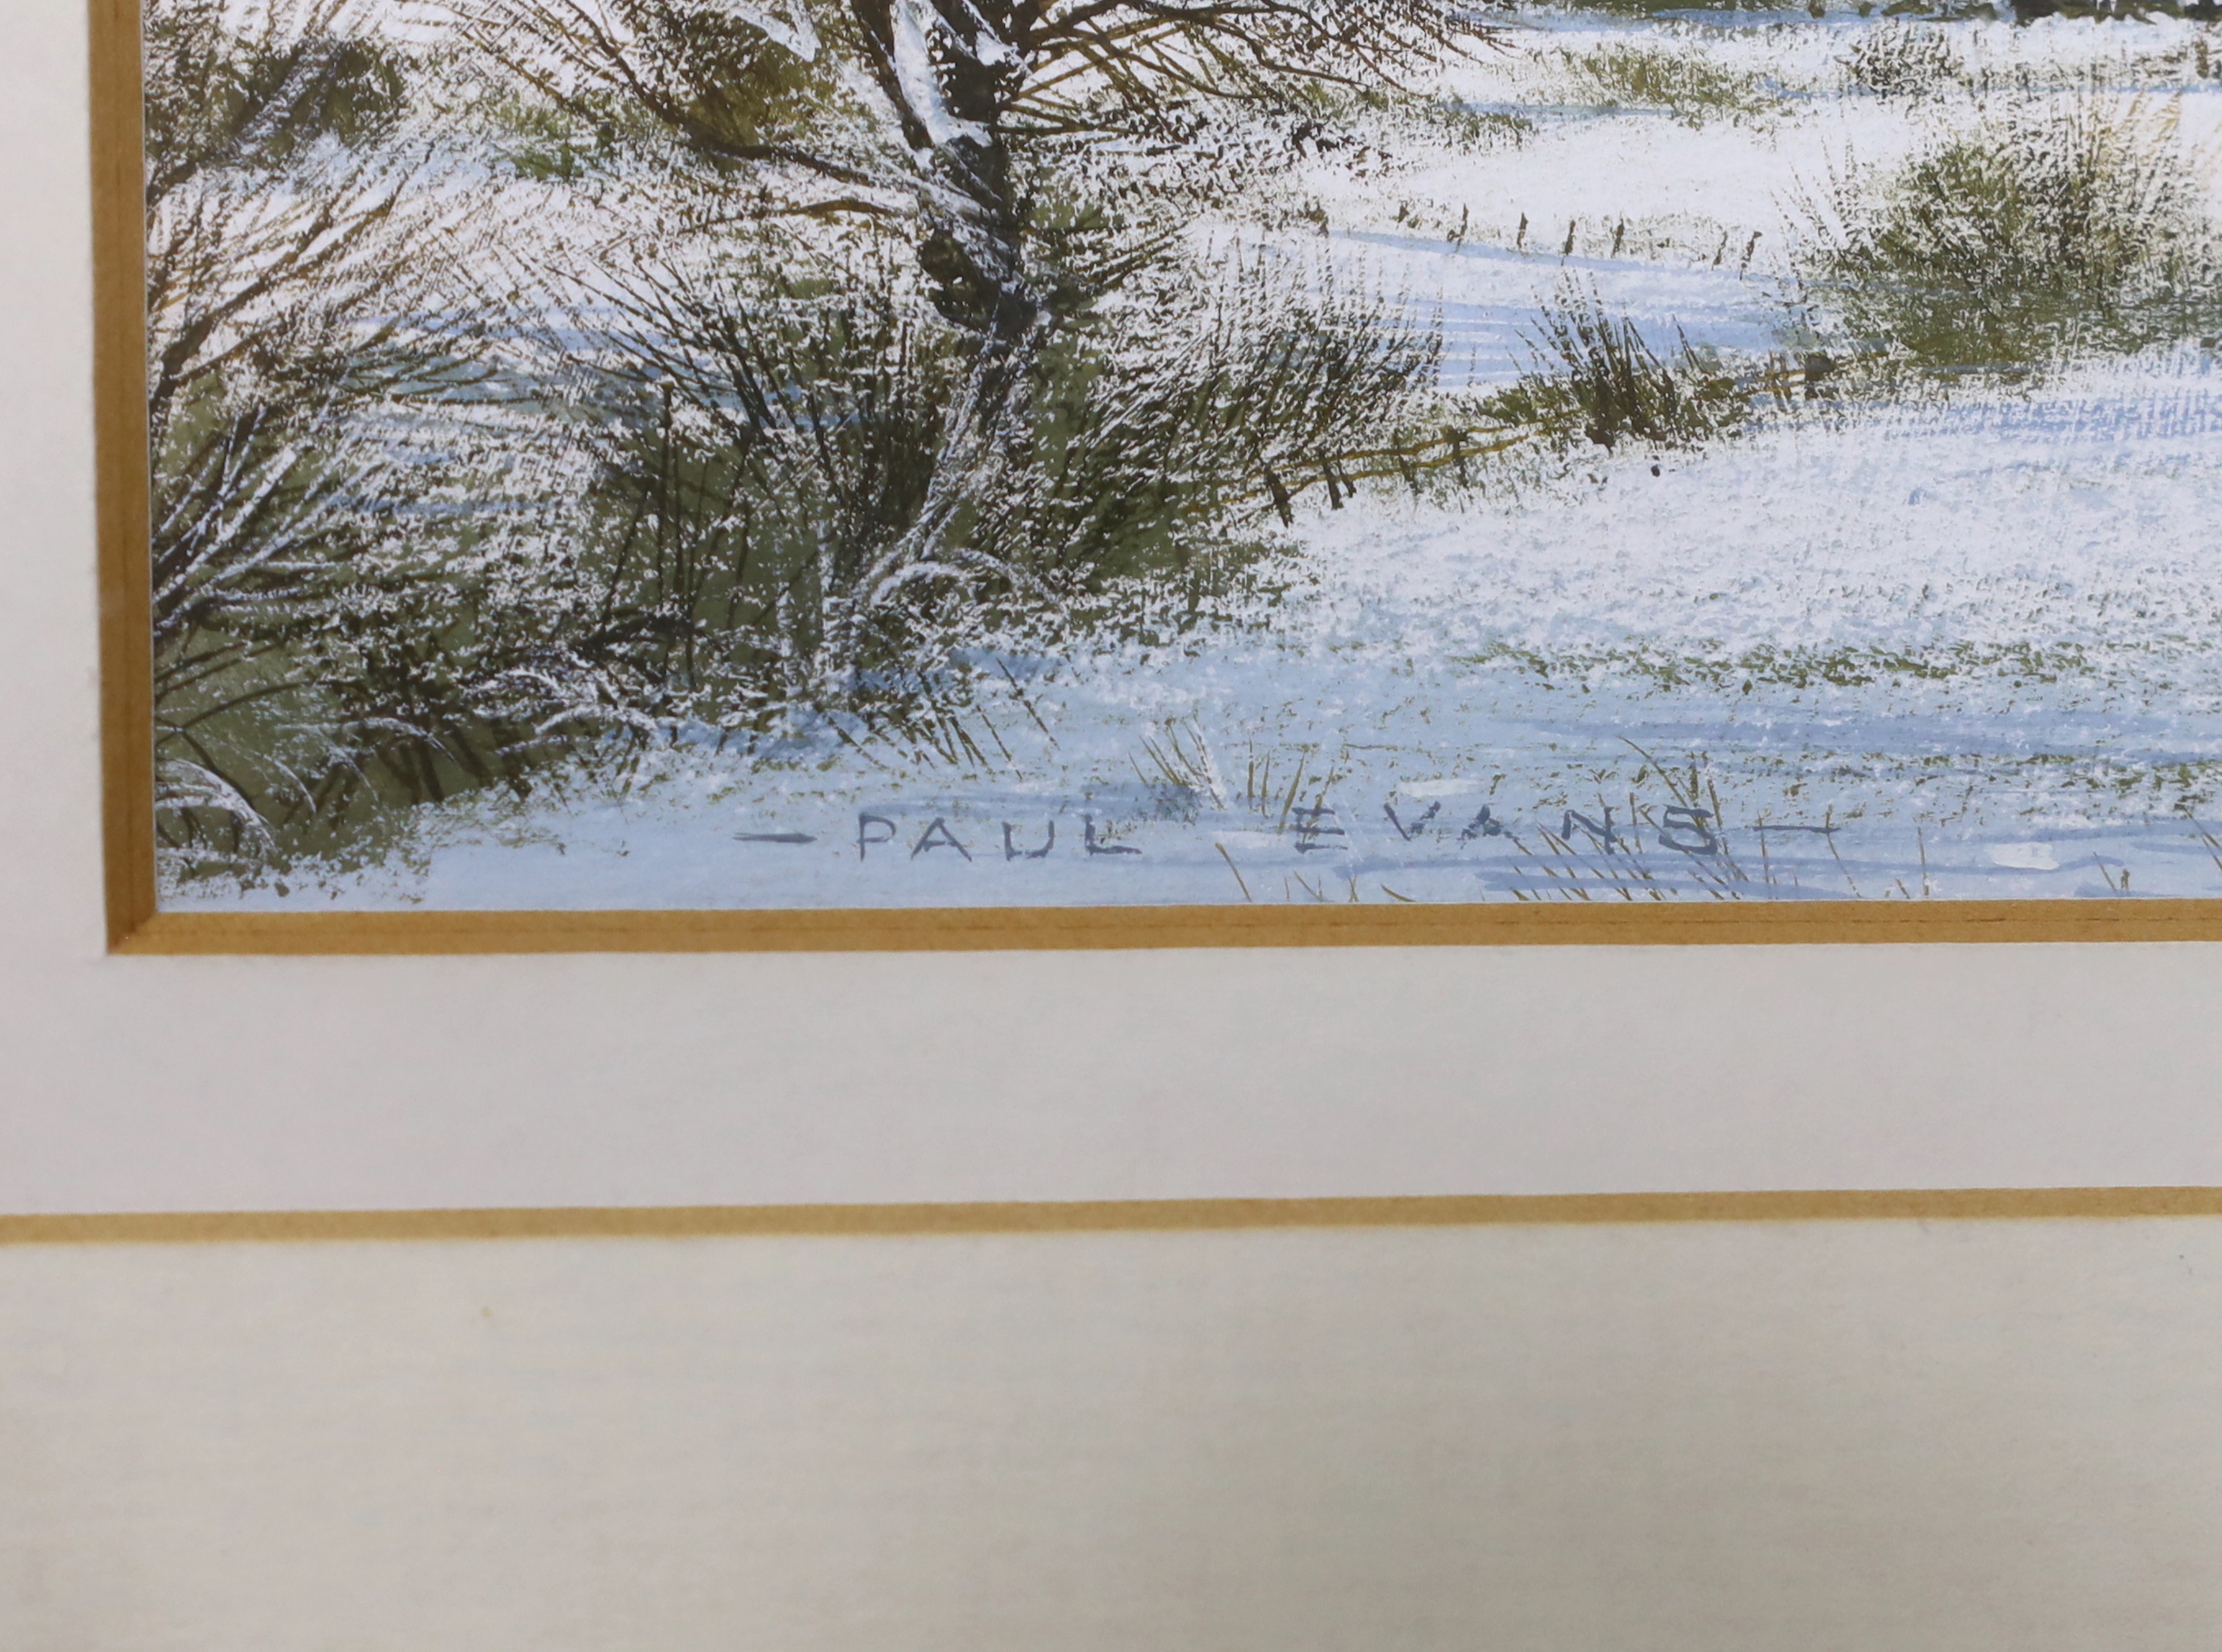 Paul Evans (b.1950) gouache, 'Towards the Downs in December', signed, 13 x 16cm